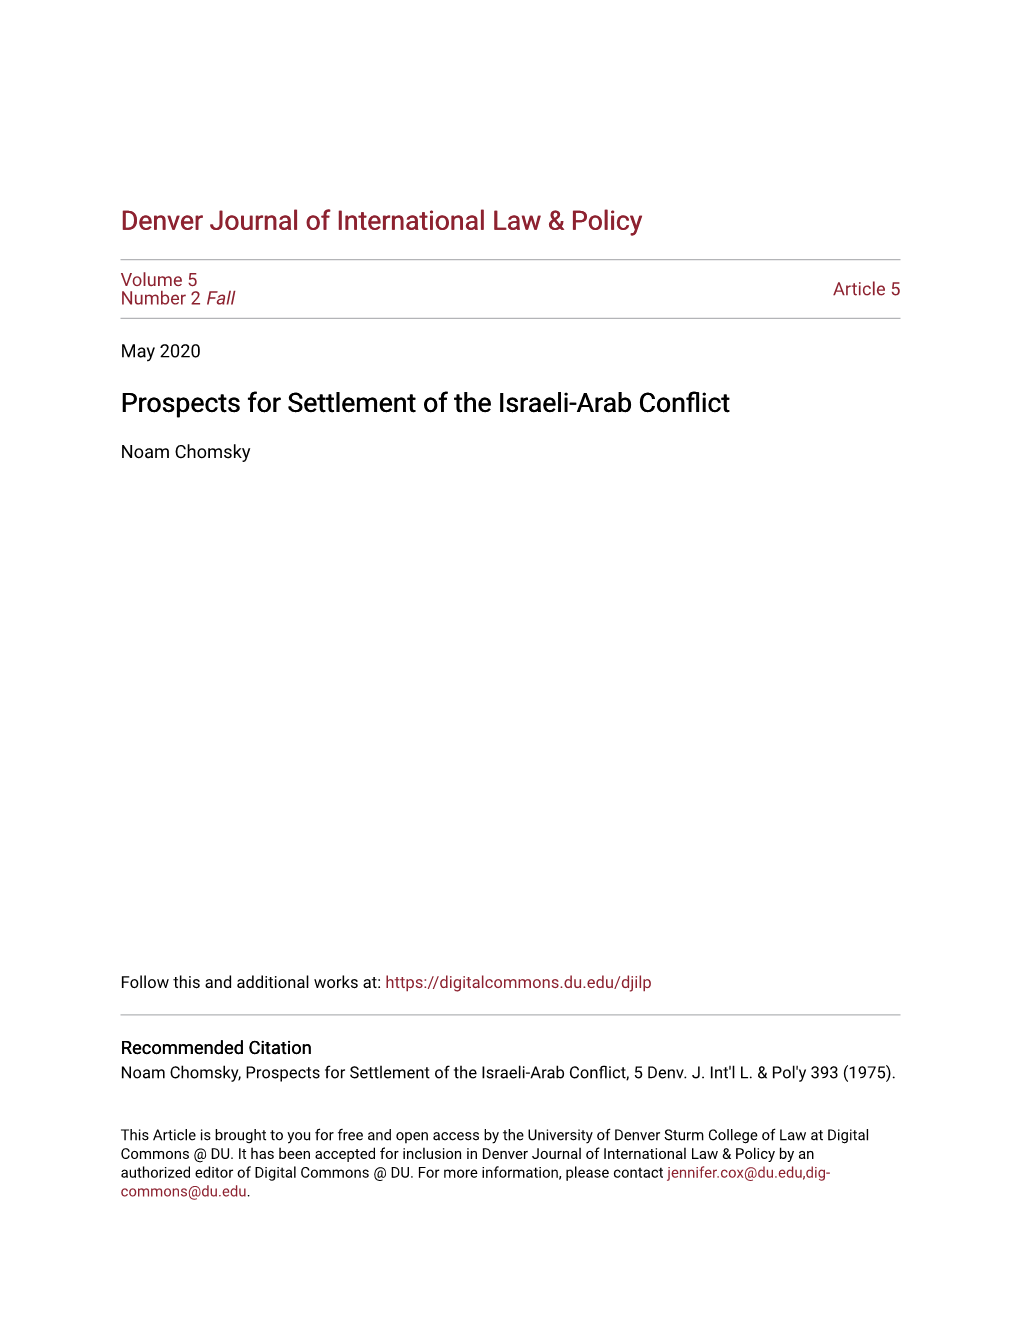 Prospects for Settlement of the Israeli-Arab Conflict